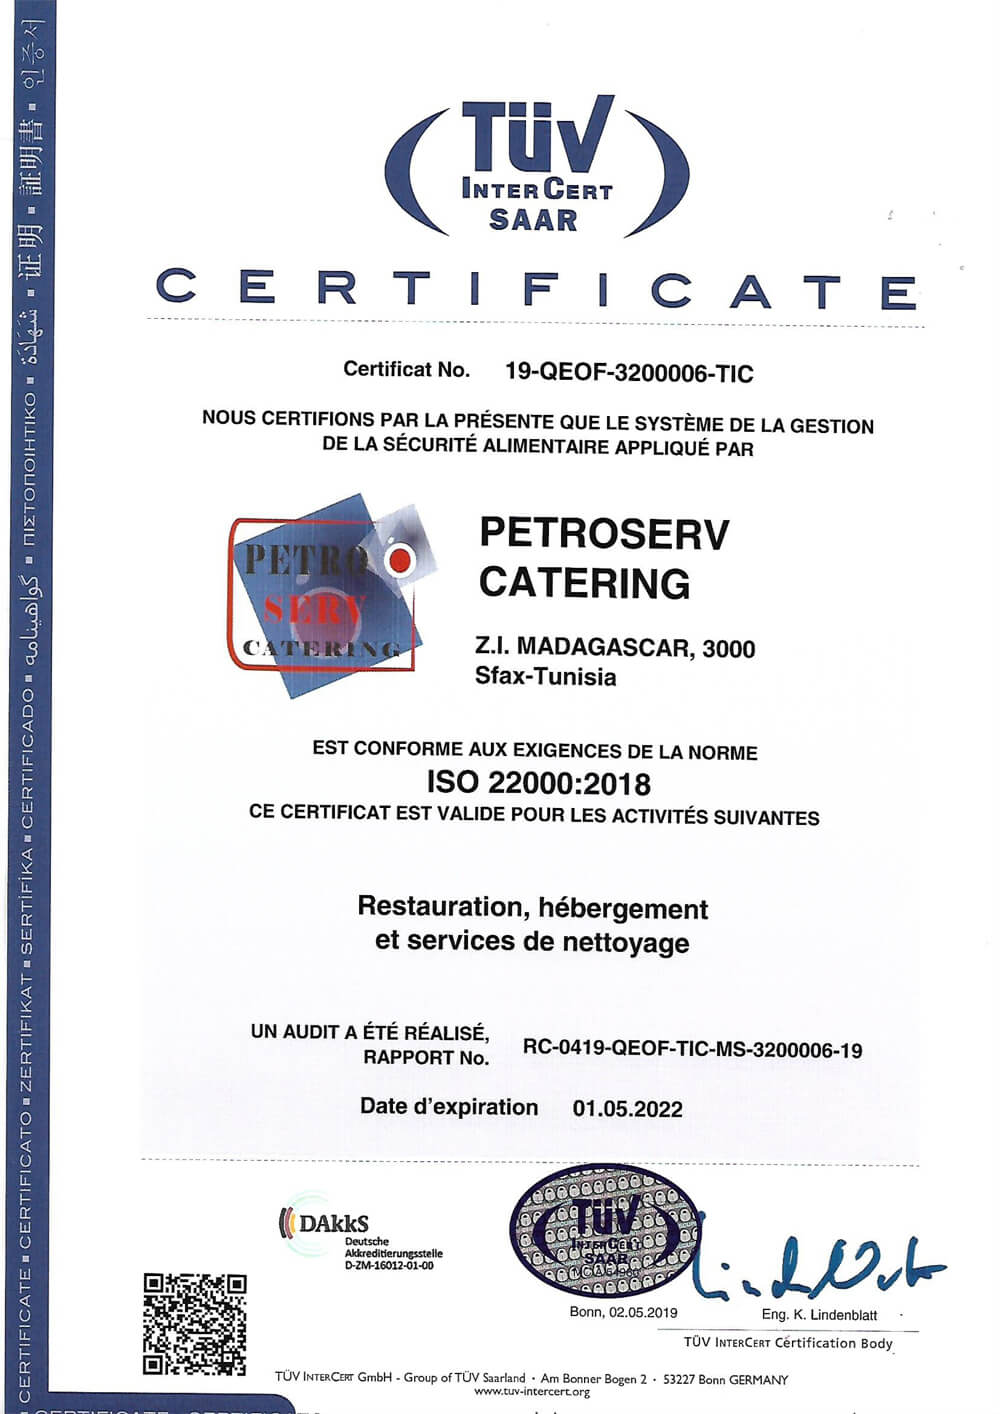 Petroserv-catering-iso22000